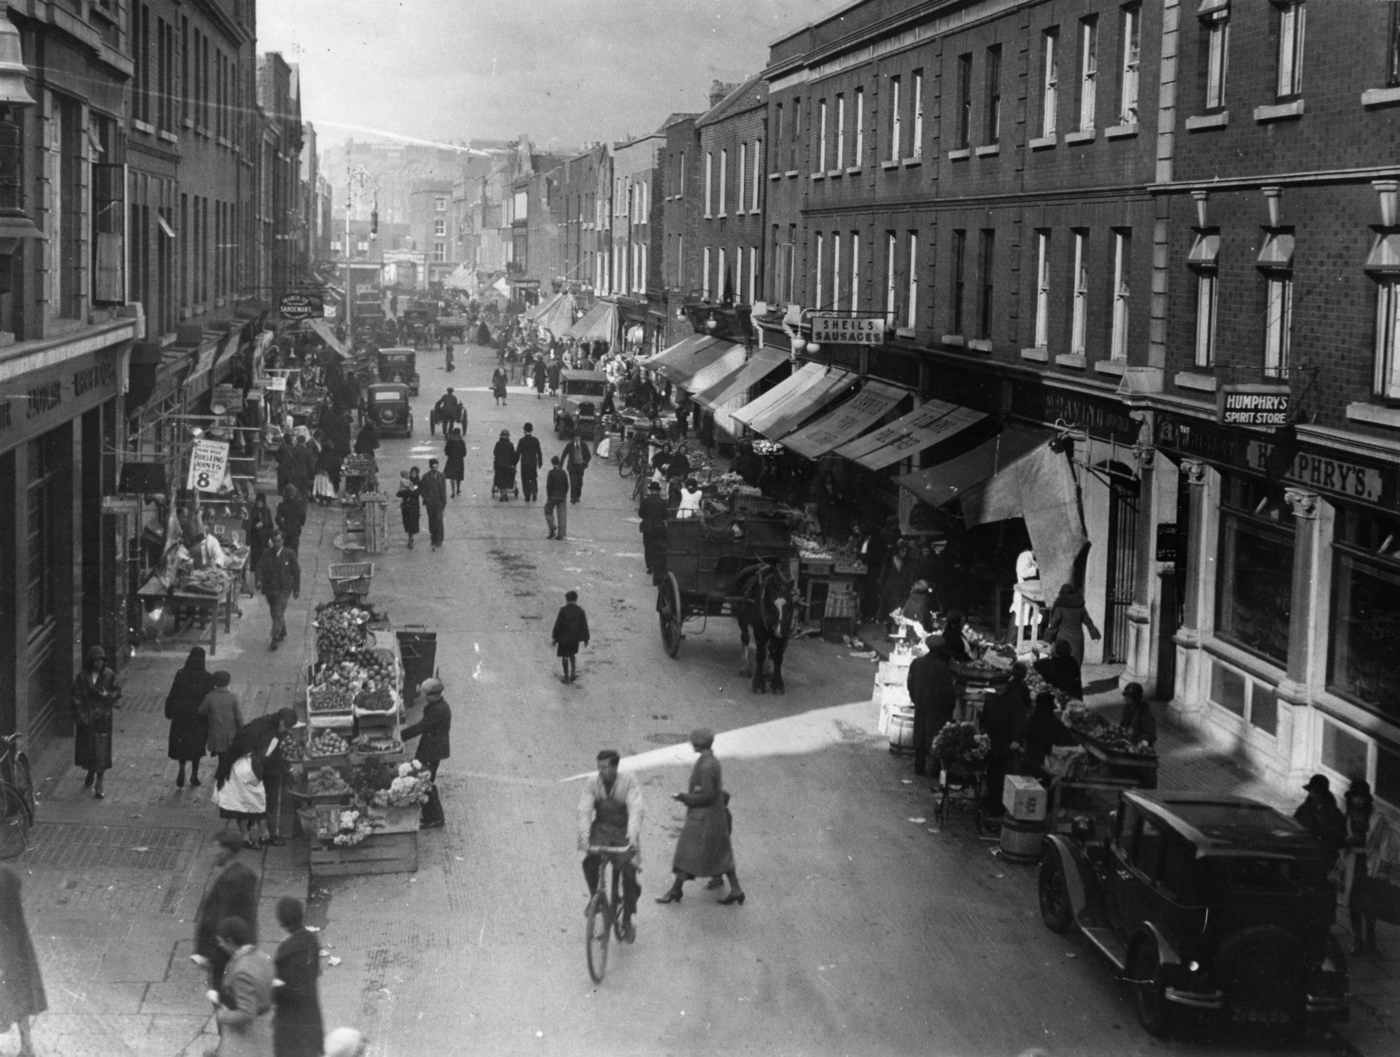 MOORE STREET, DUBLIN, C. 1930